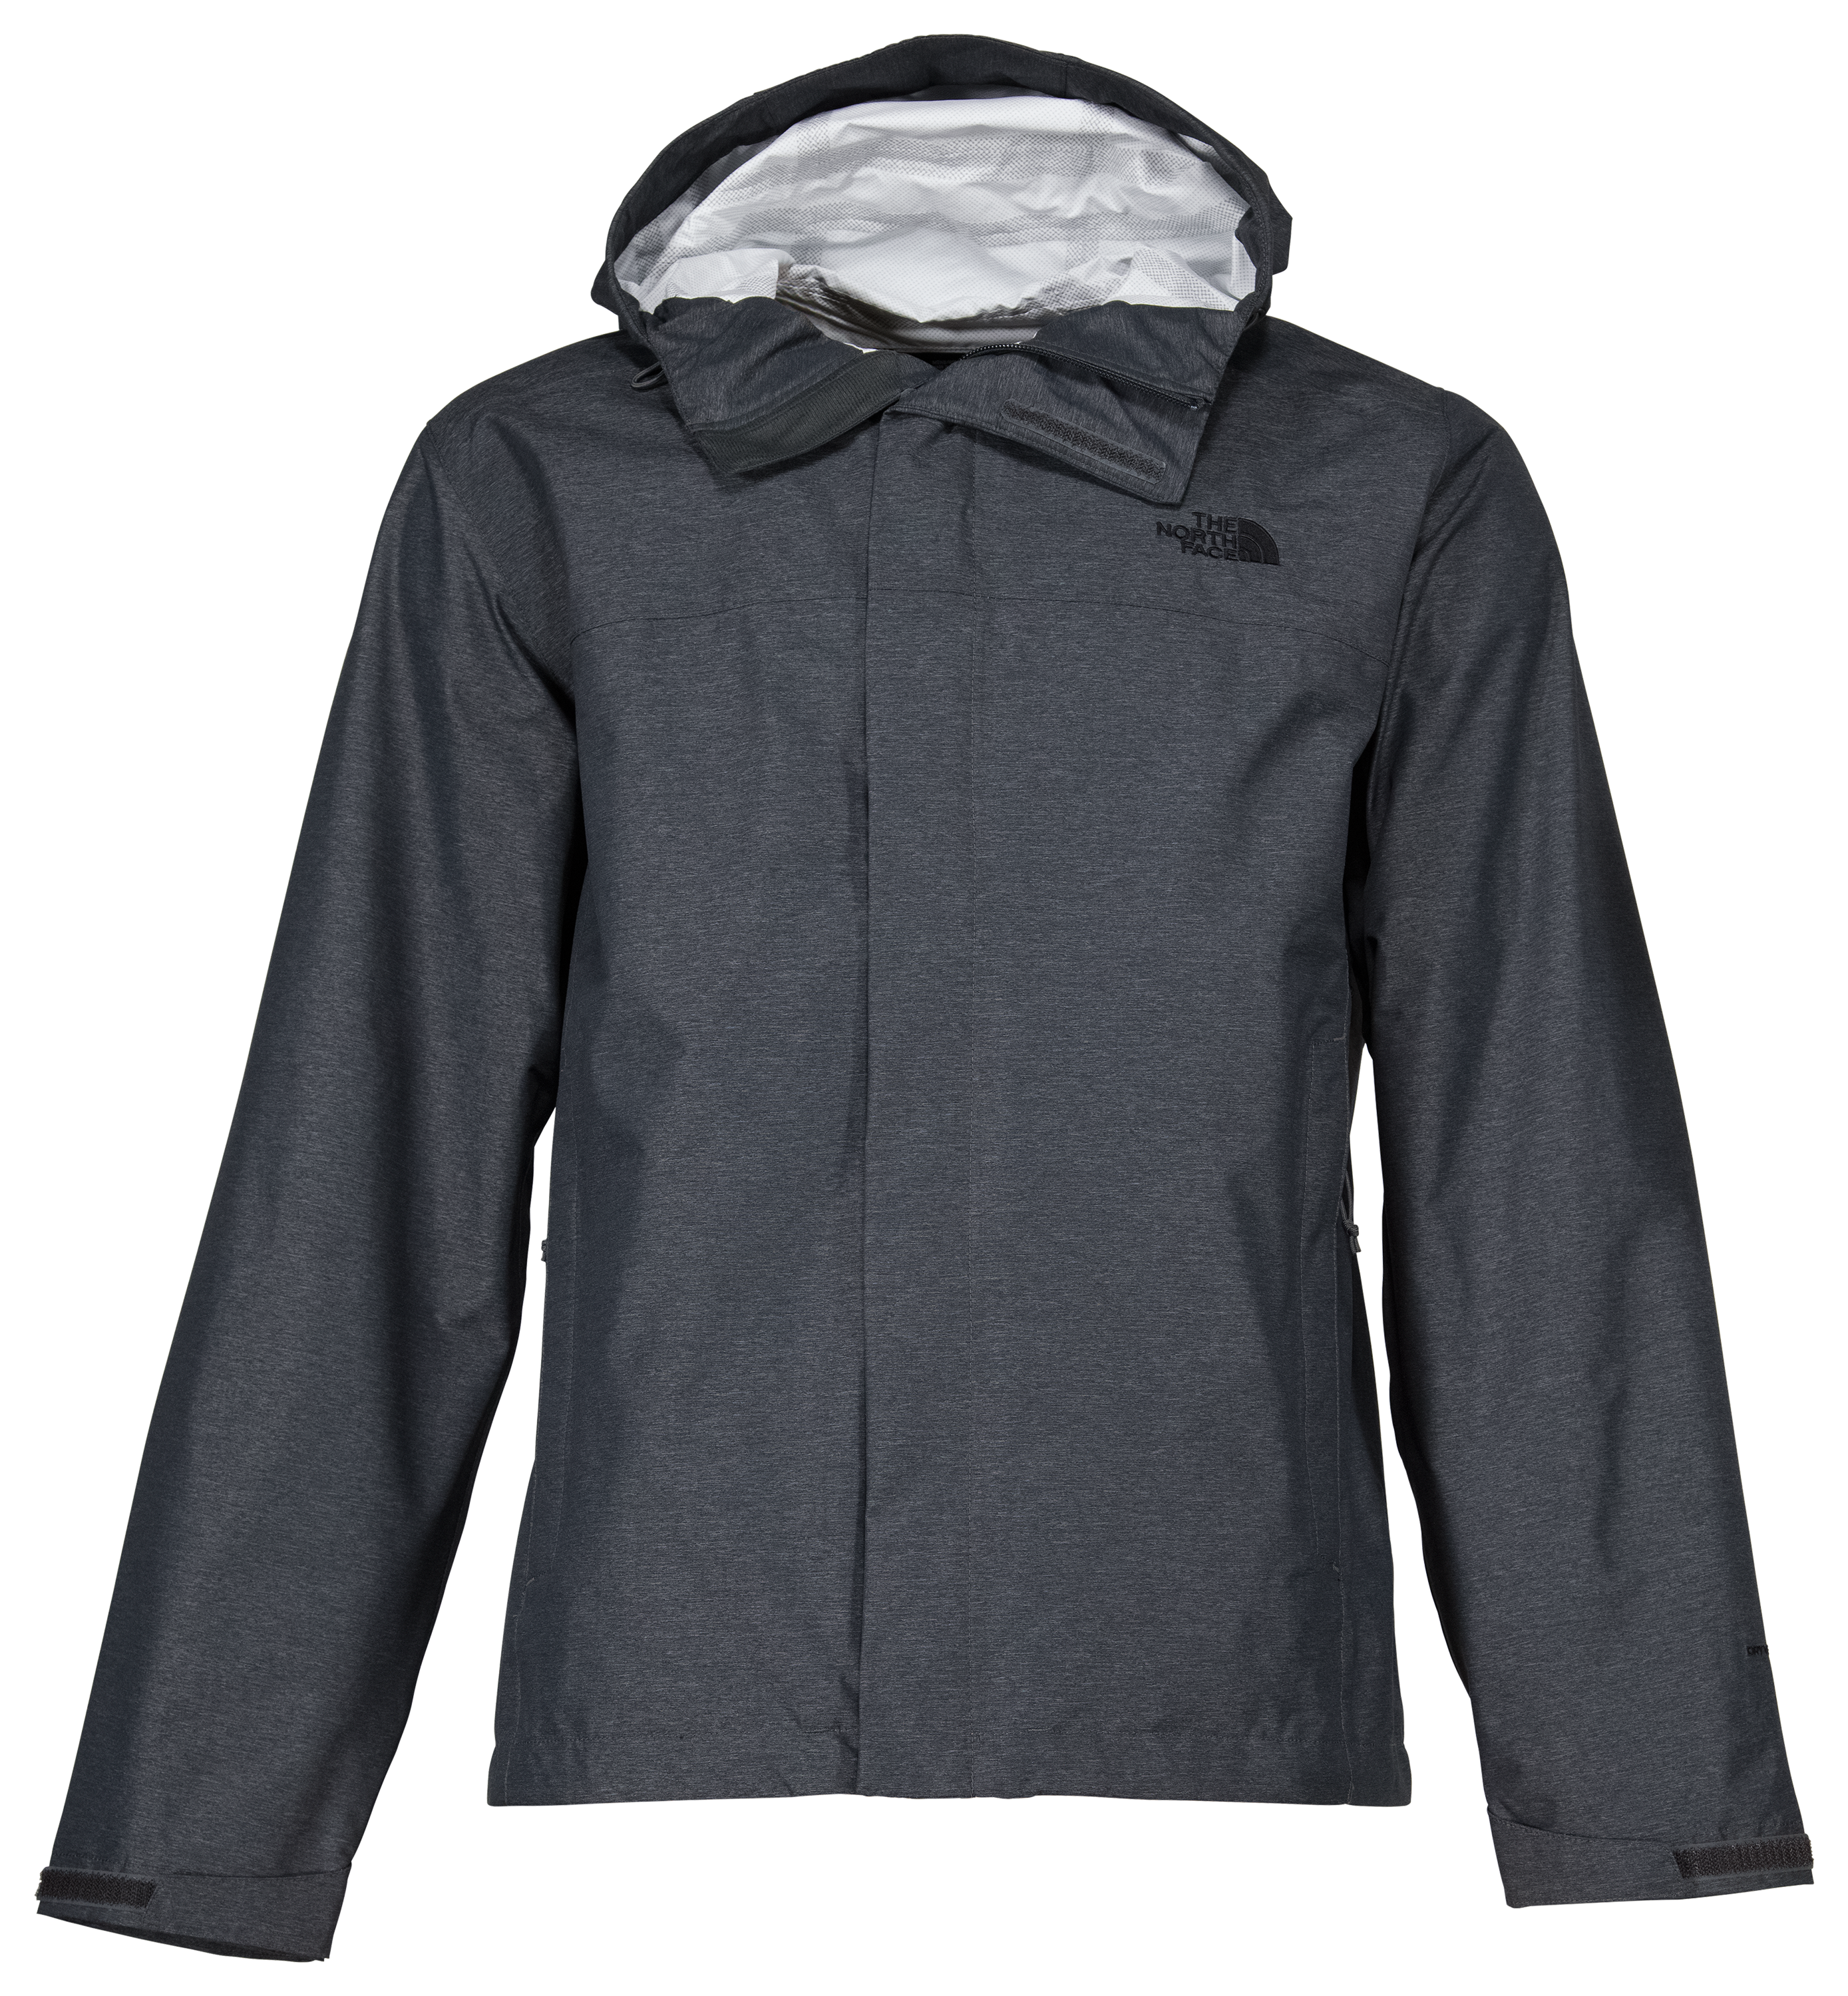 The North Face Venture 2 Jacket for Men - TNF Dark Grey Heather - 2XL